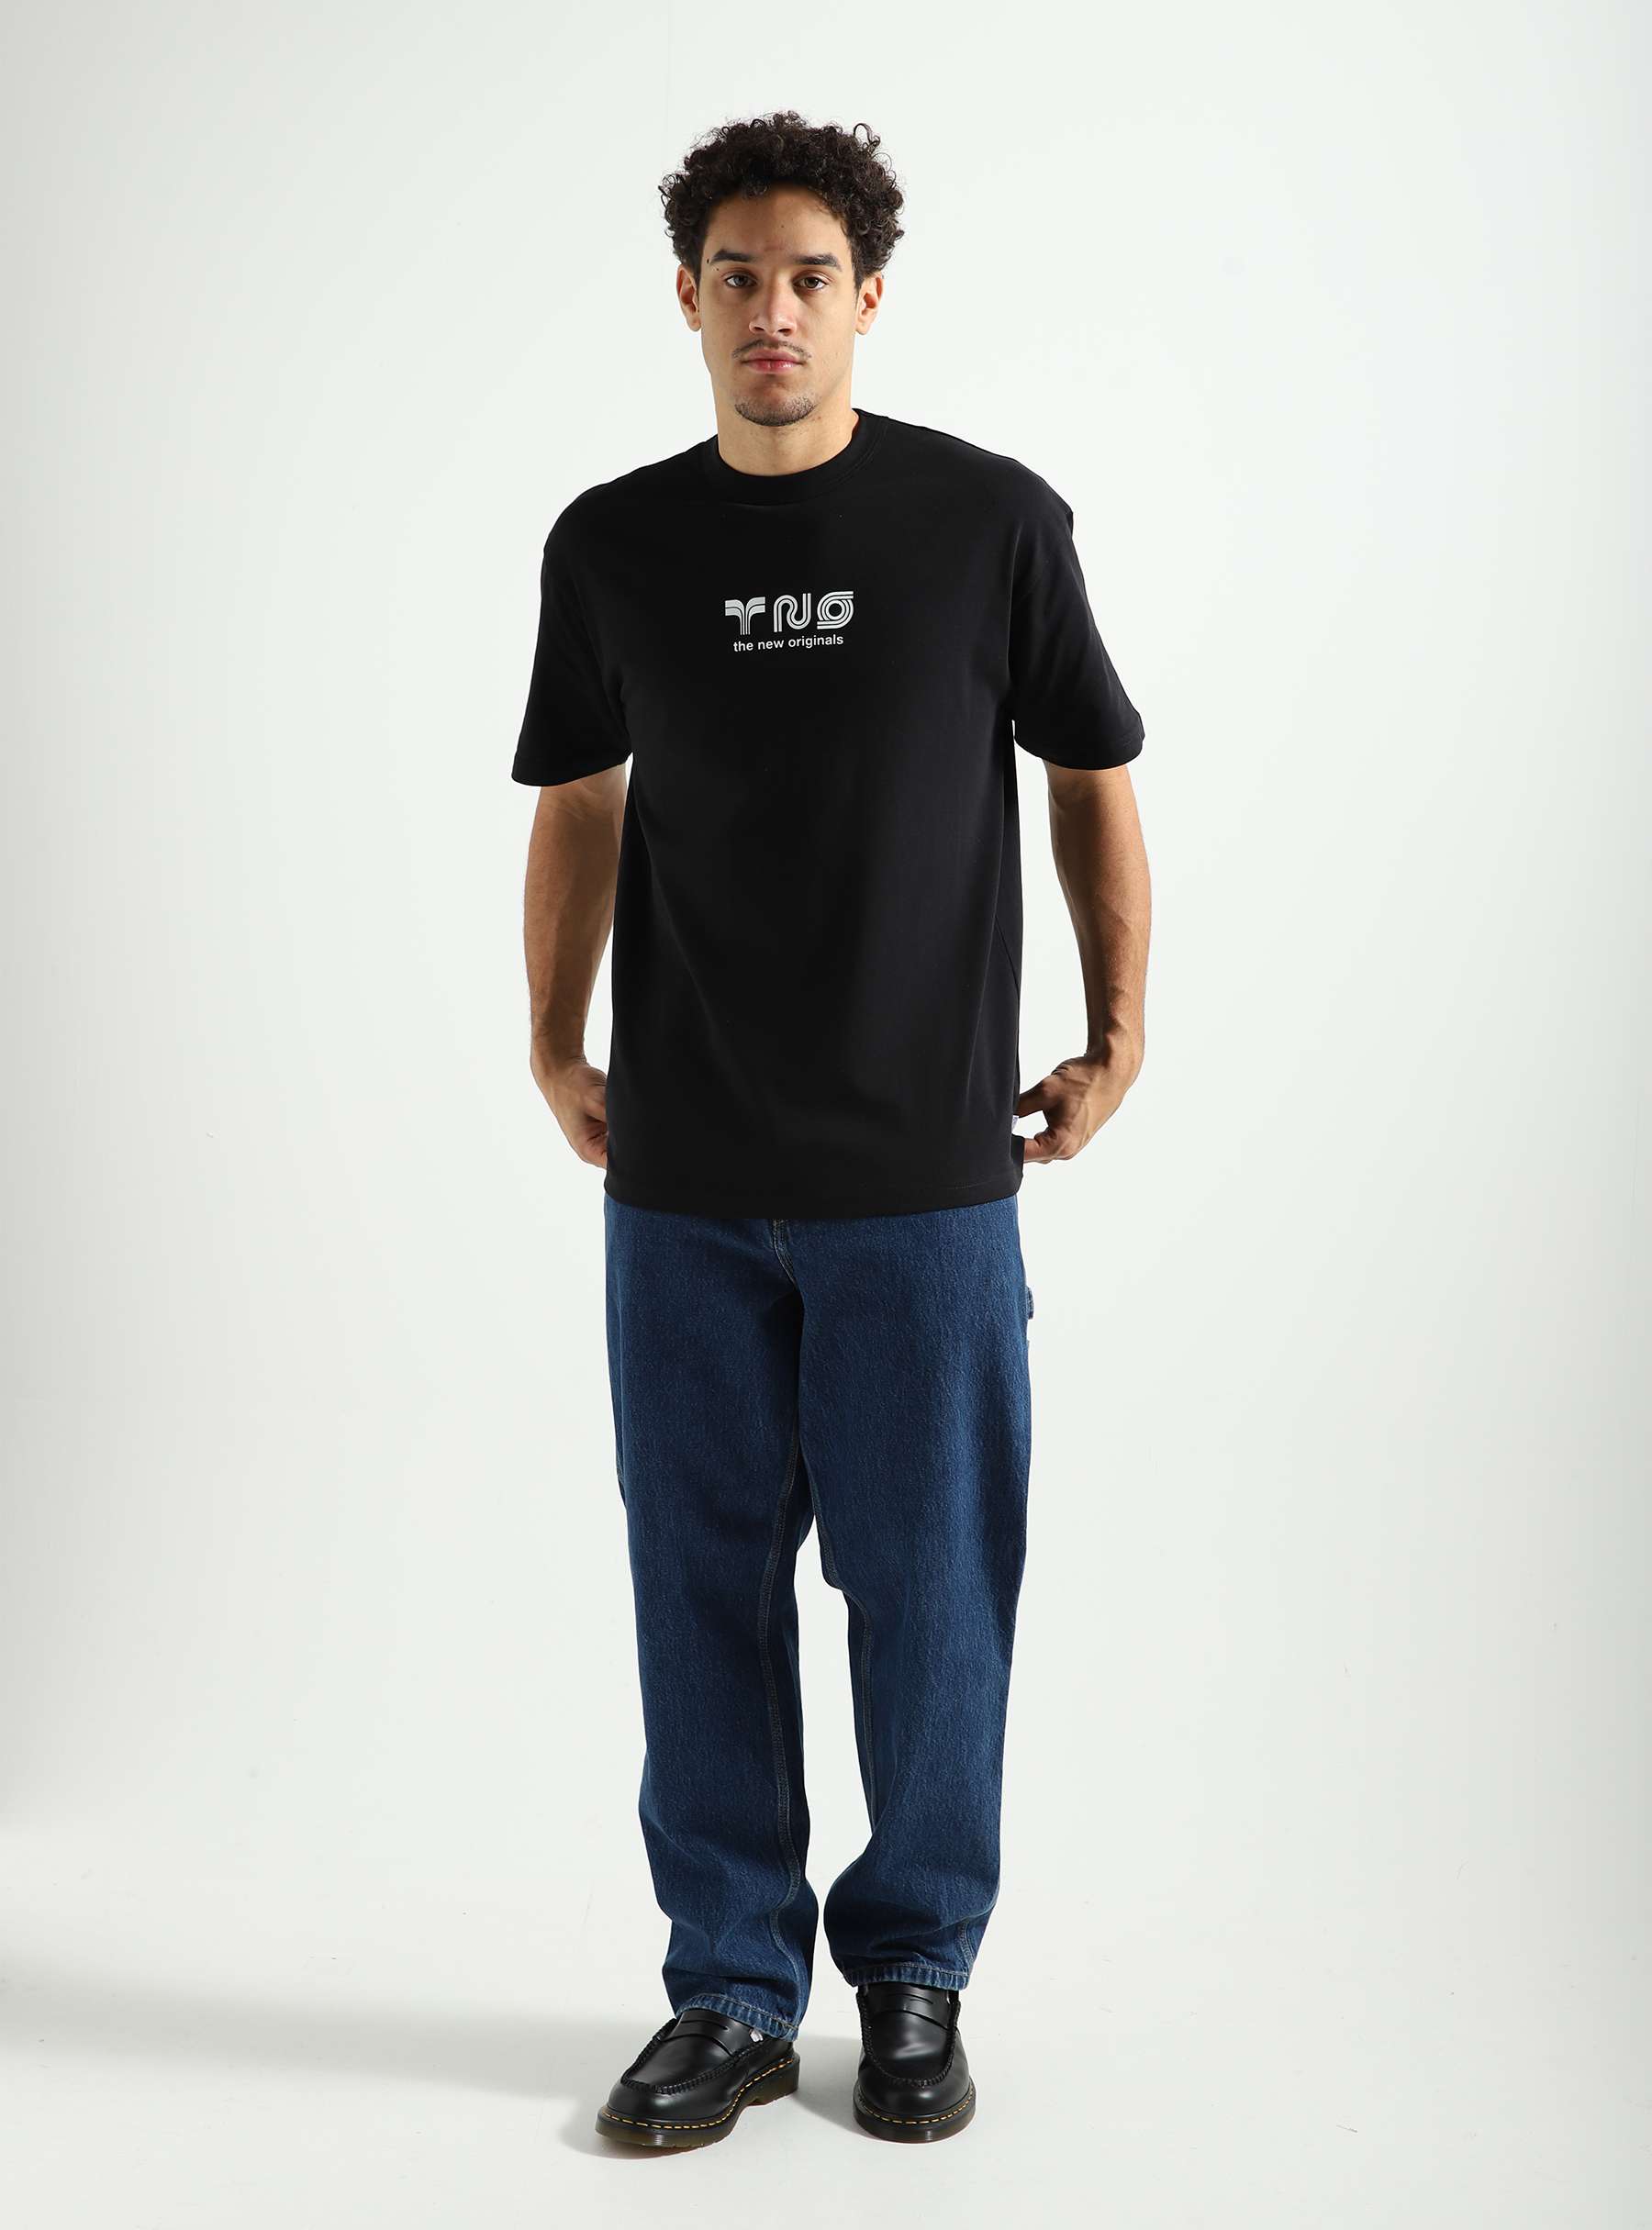 Supergraphic T-shirt Black 100SGHD723.999